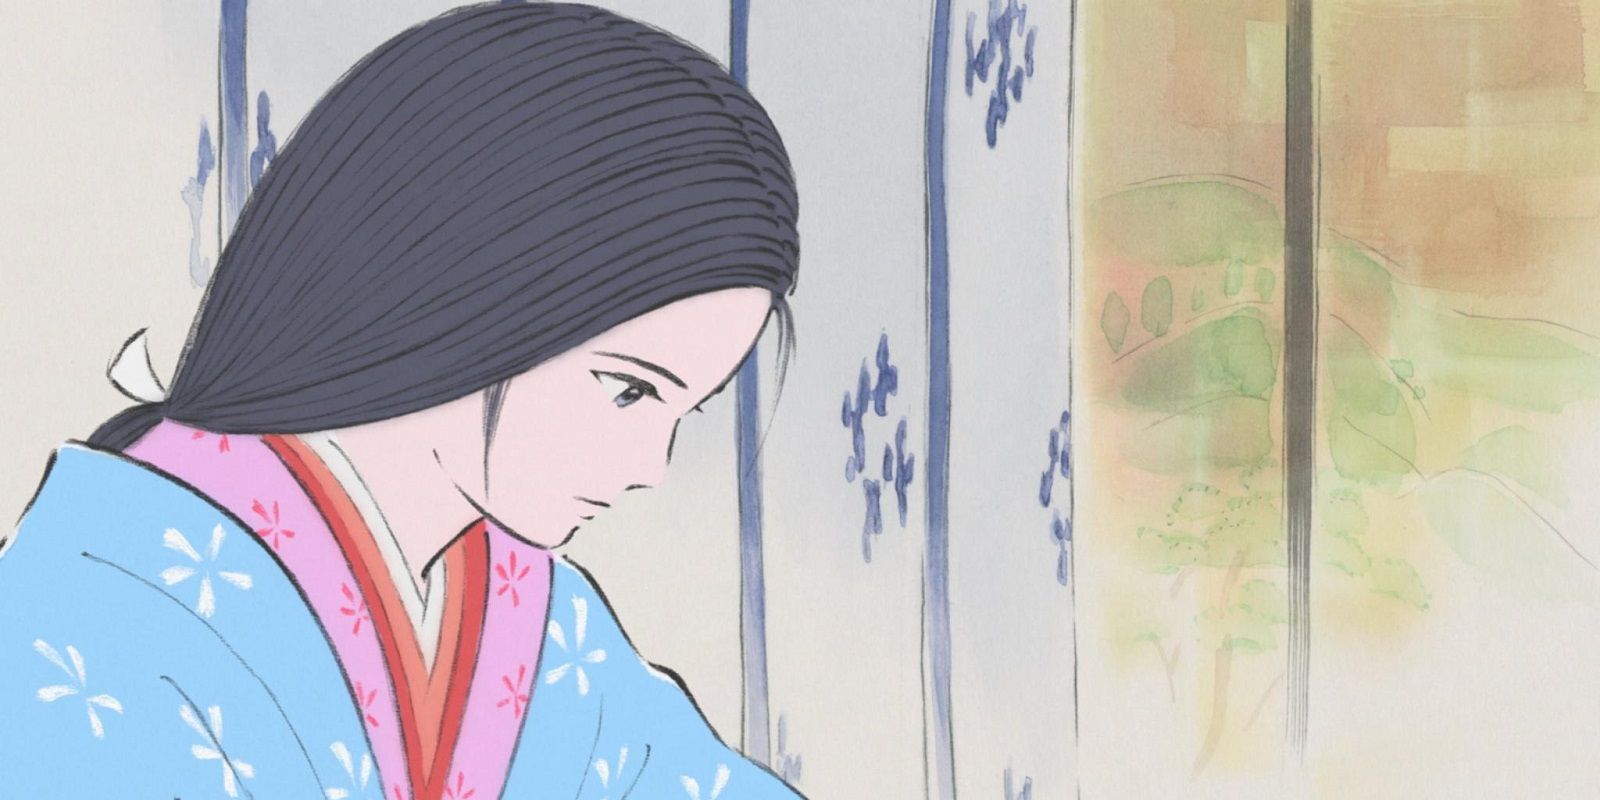 Princess Kaguya looks down with a sad expression in The Tale of the Princess Kaguya